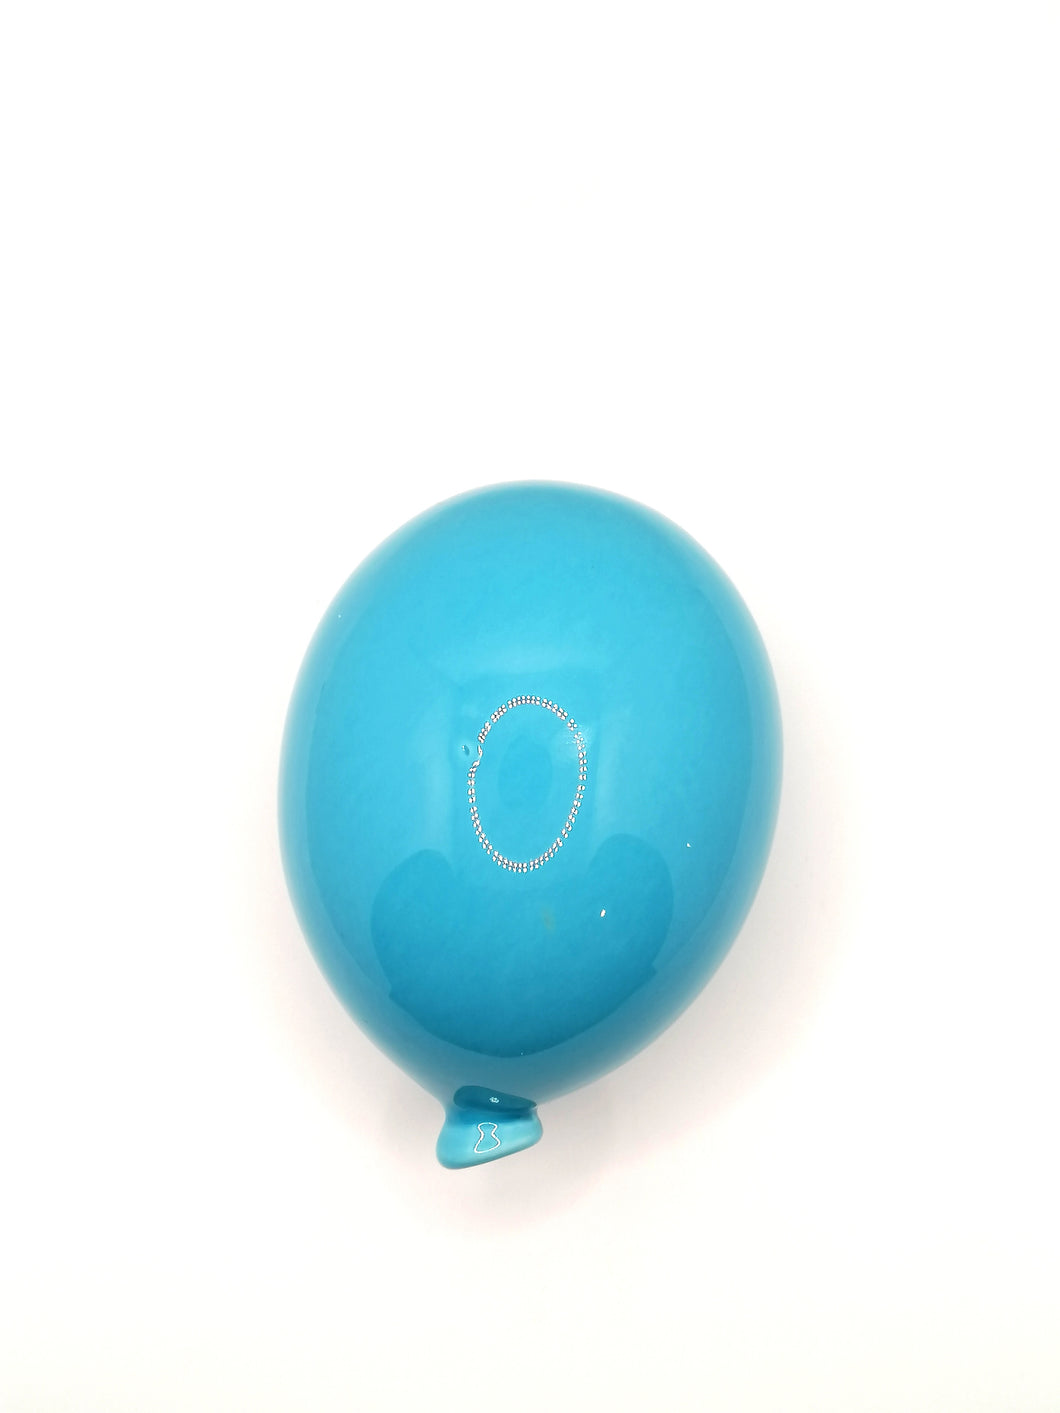 Light blue ceramic balloon